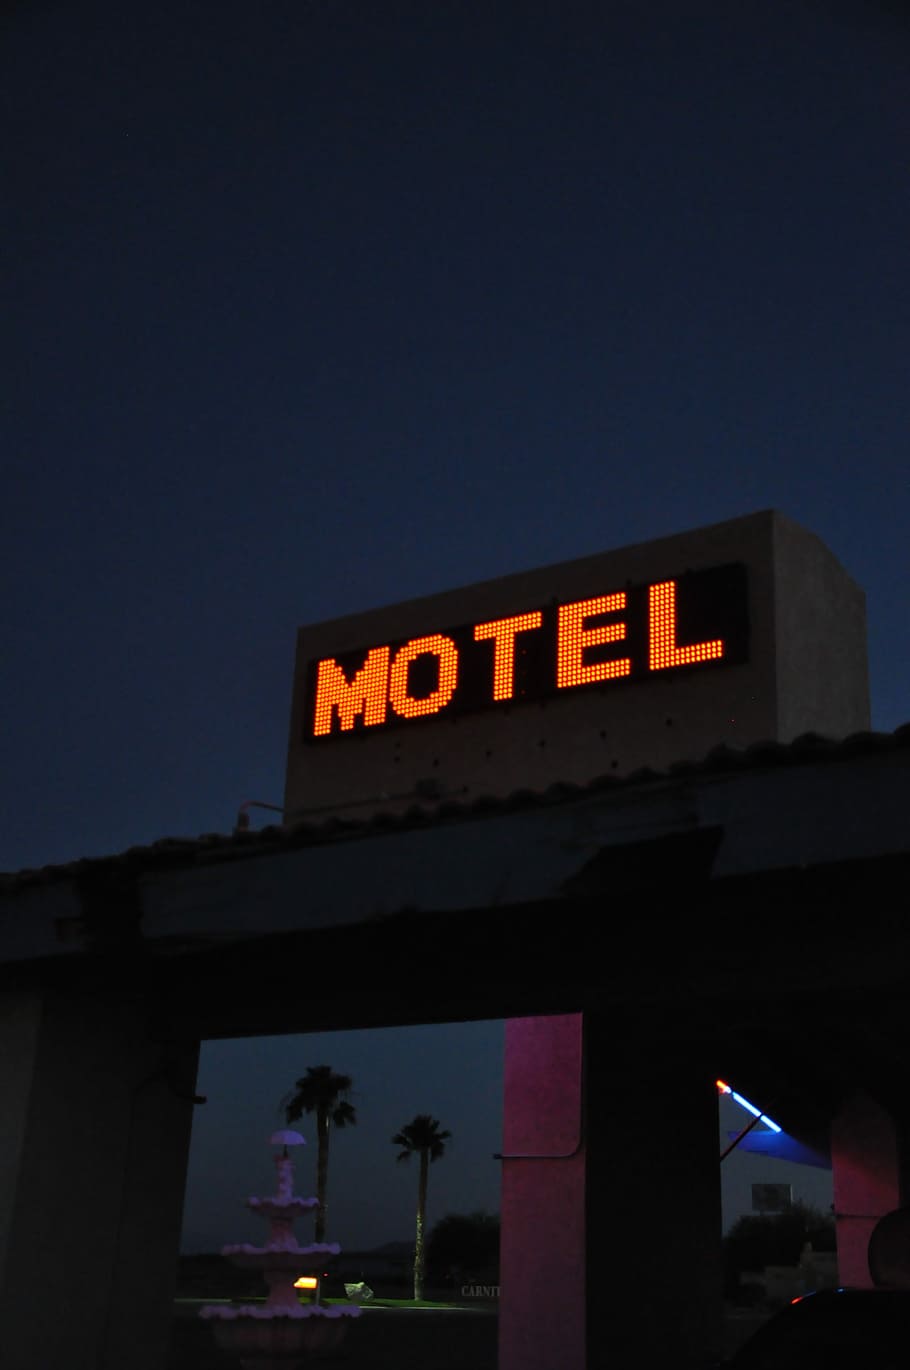 Motel, Night, Neon, Nevada, Hotel, sleeping, sleep, light, illuminated, communication